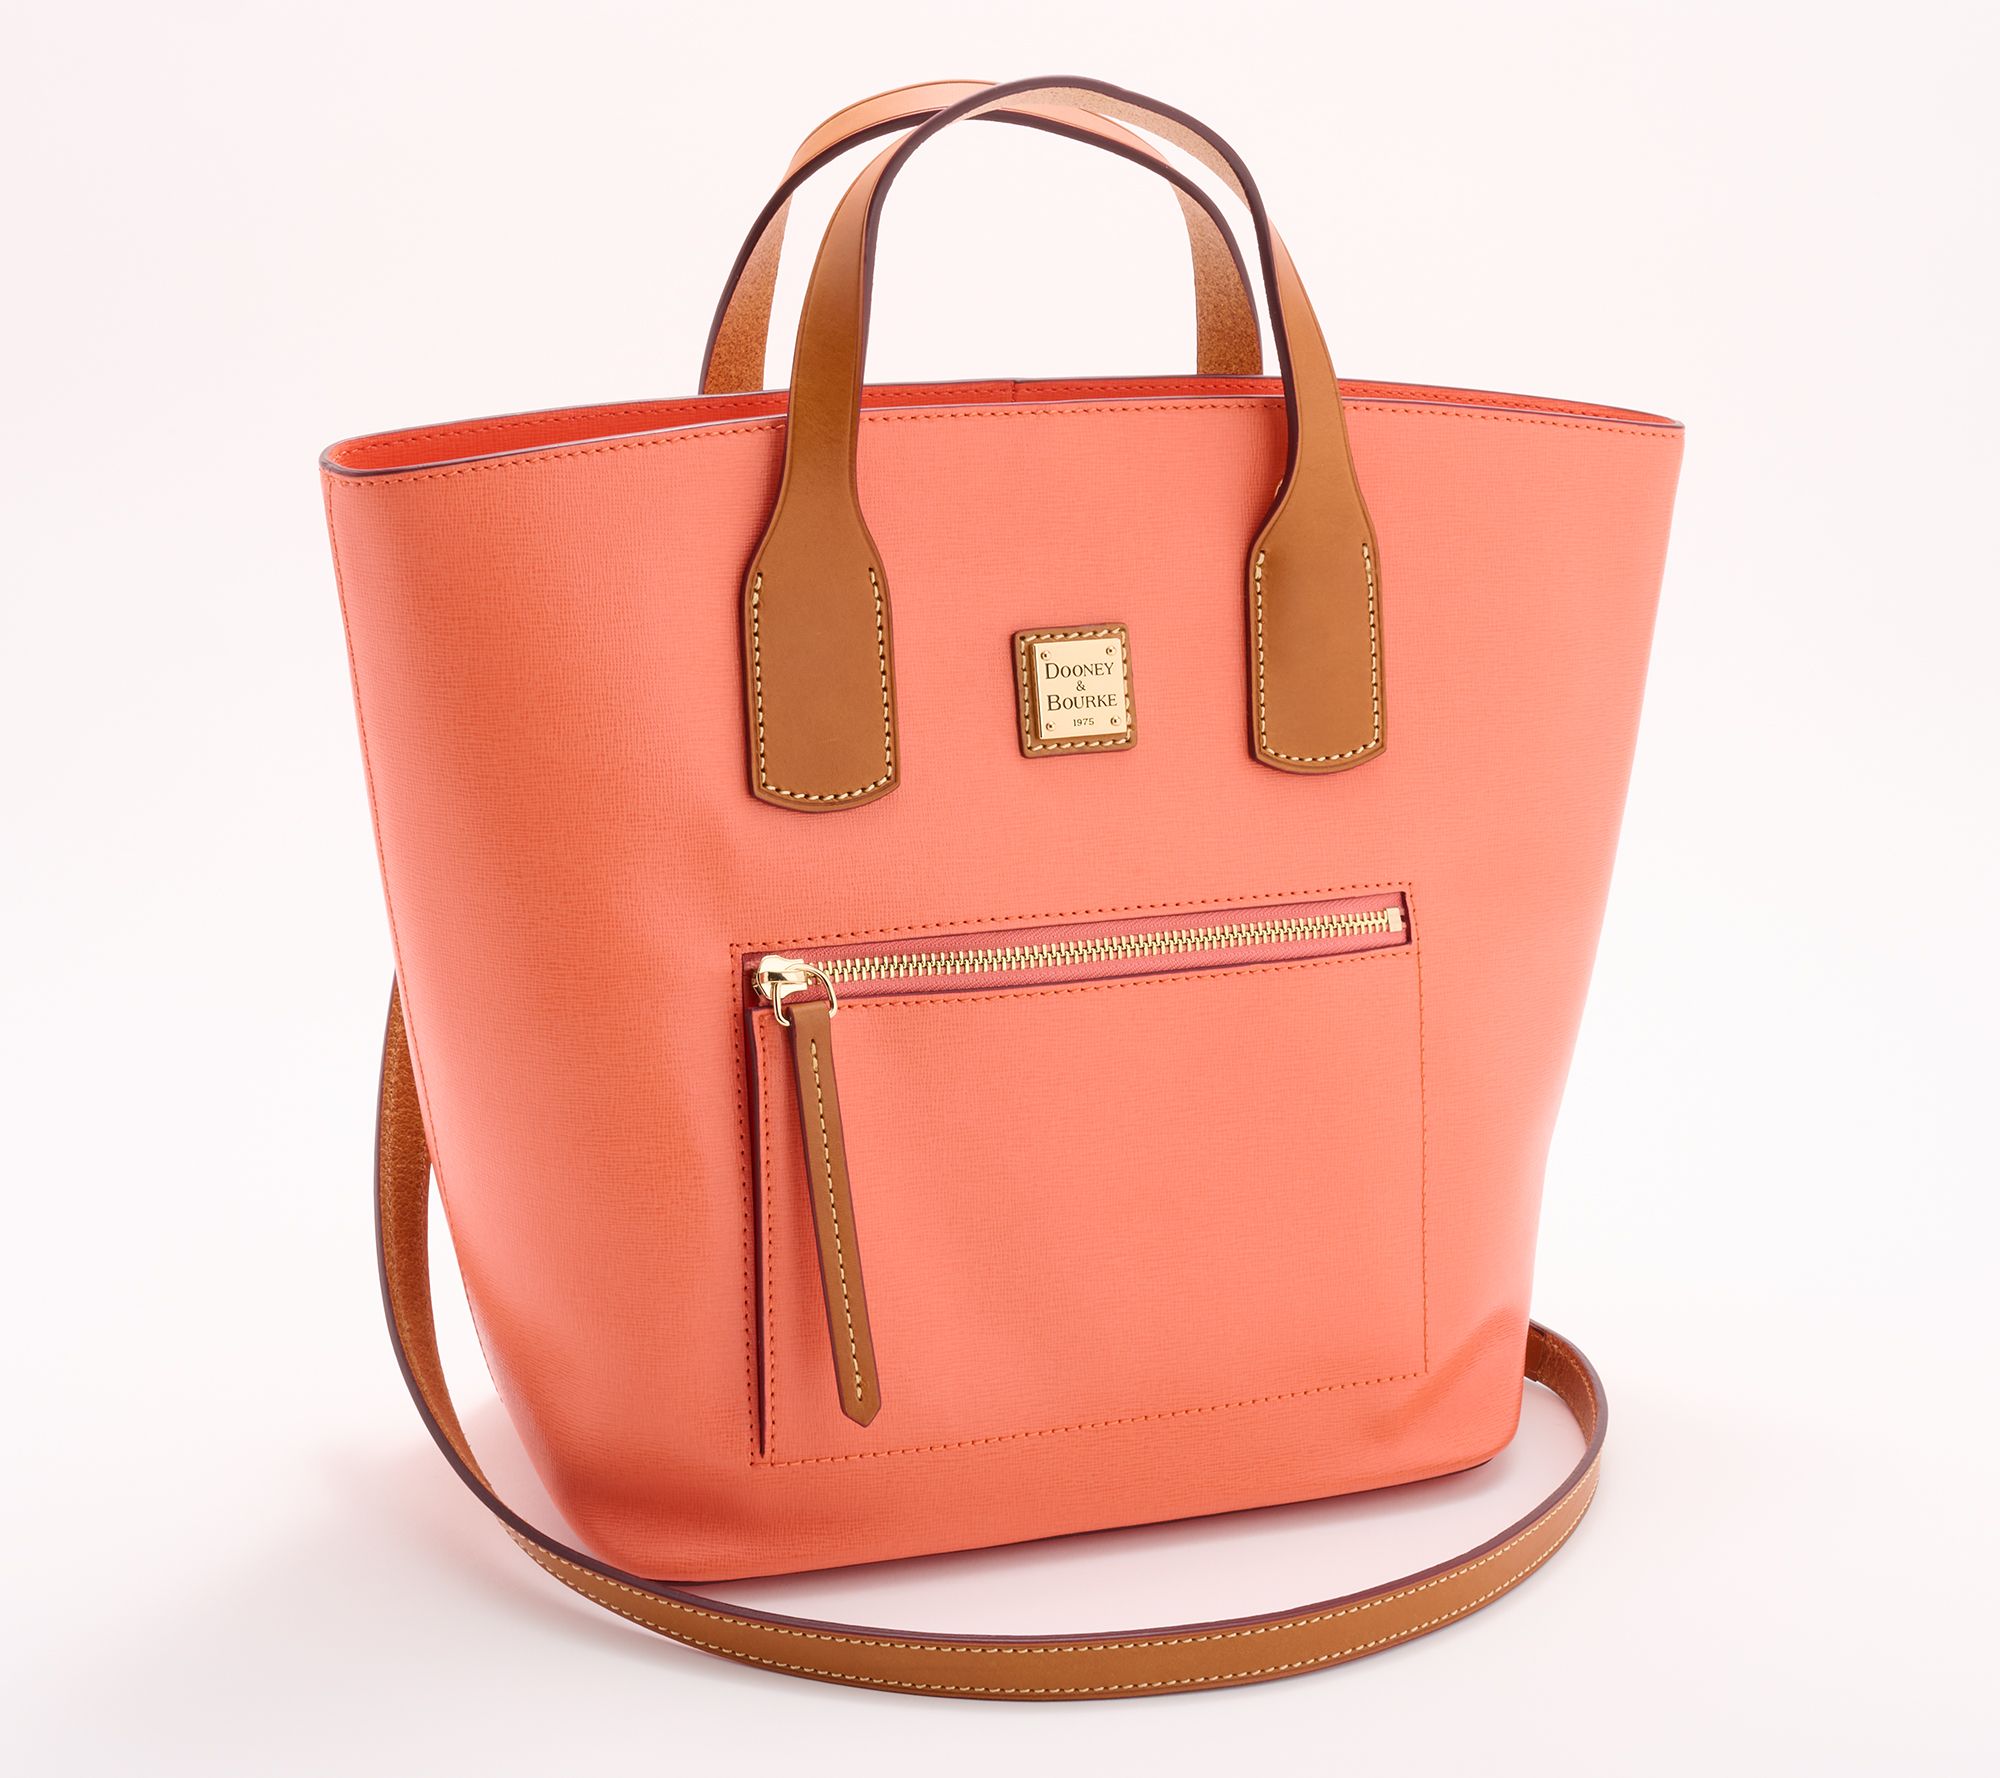  Dooney & Bourke Handbag, Saffiano Shopper Tote - Pale